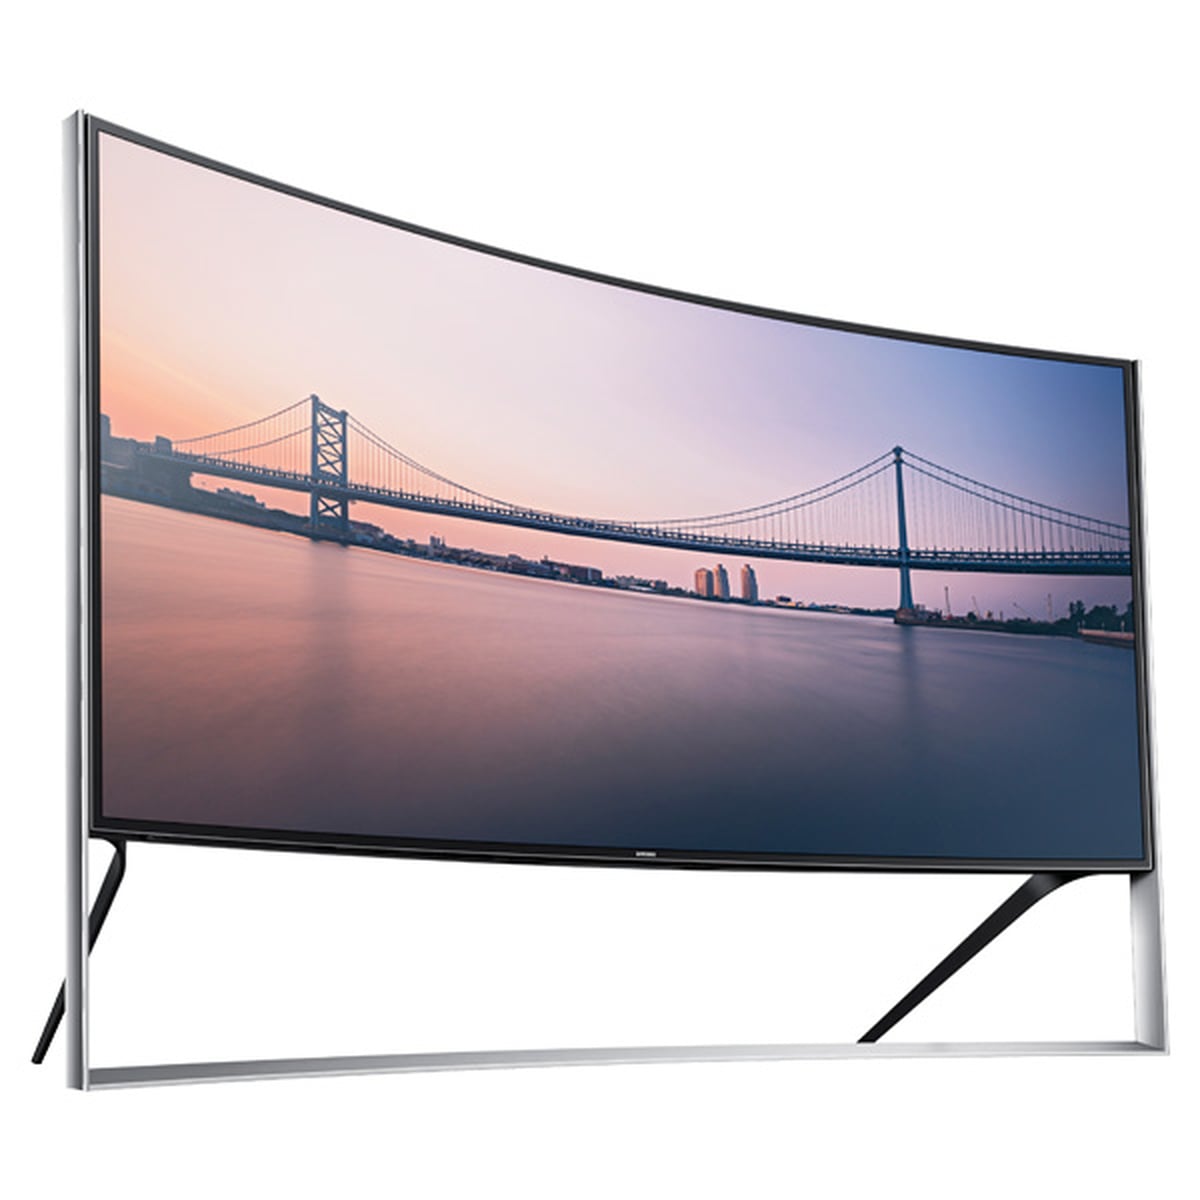 Samsung 105-Inch Curved TV Price | POPSUGAR Tech